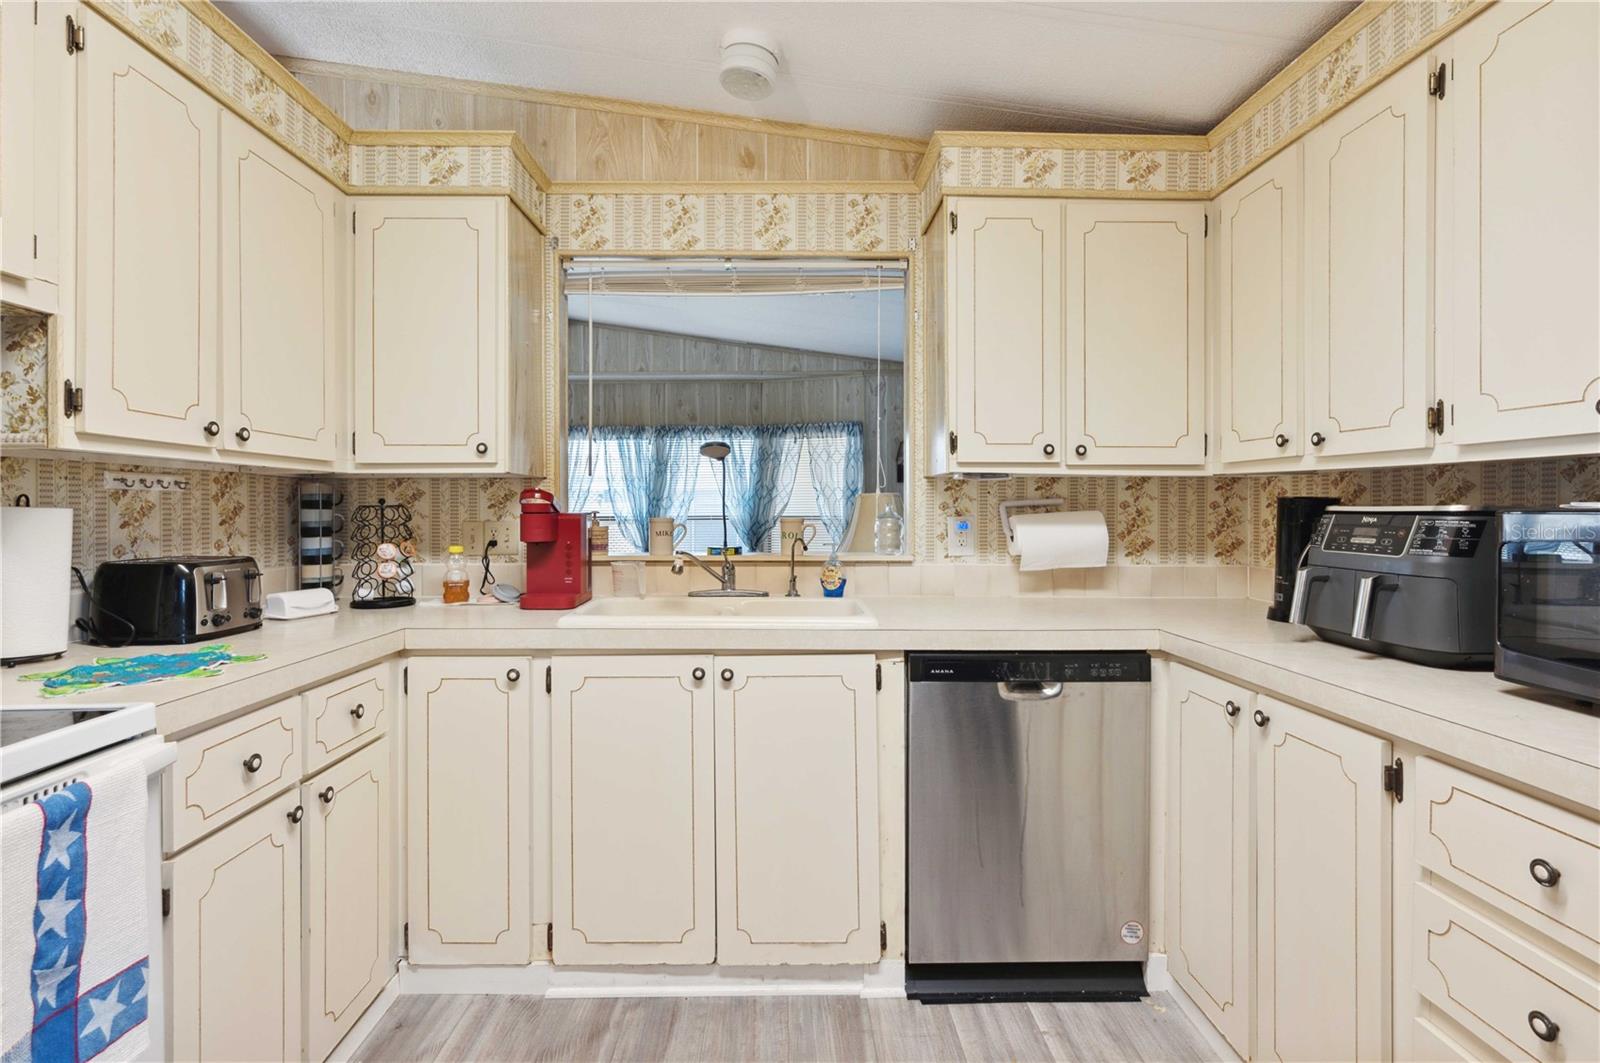 This kitchen offers dishwasher, range, newer refrigerator, and ample storage.